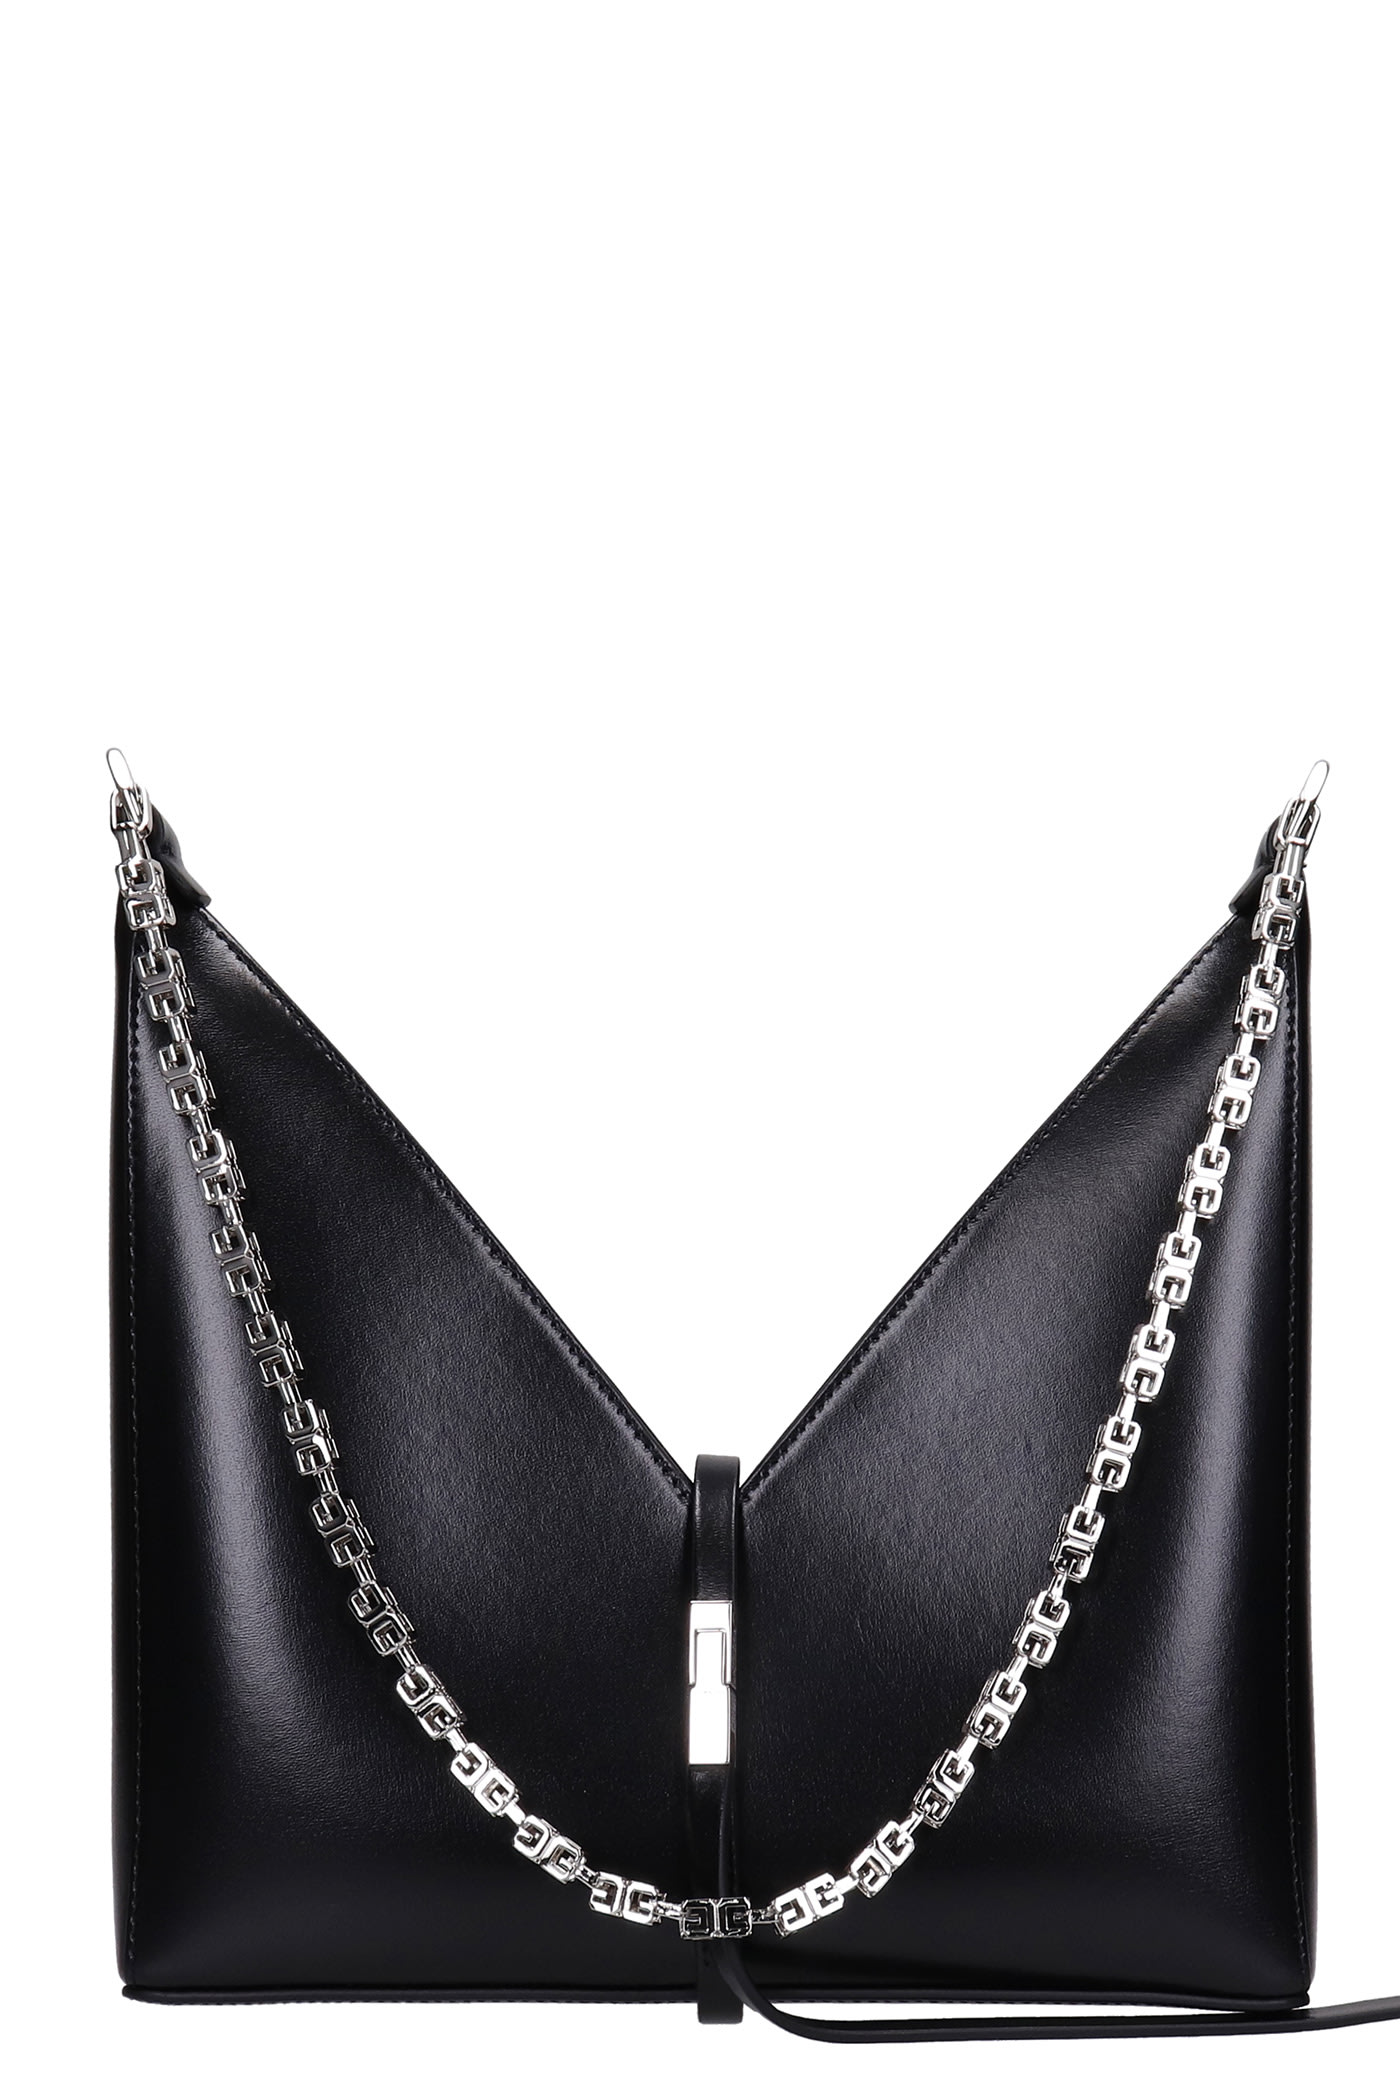 Givenchy Cut Out Shoulder Bag In Black Leather